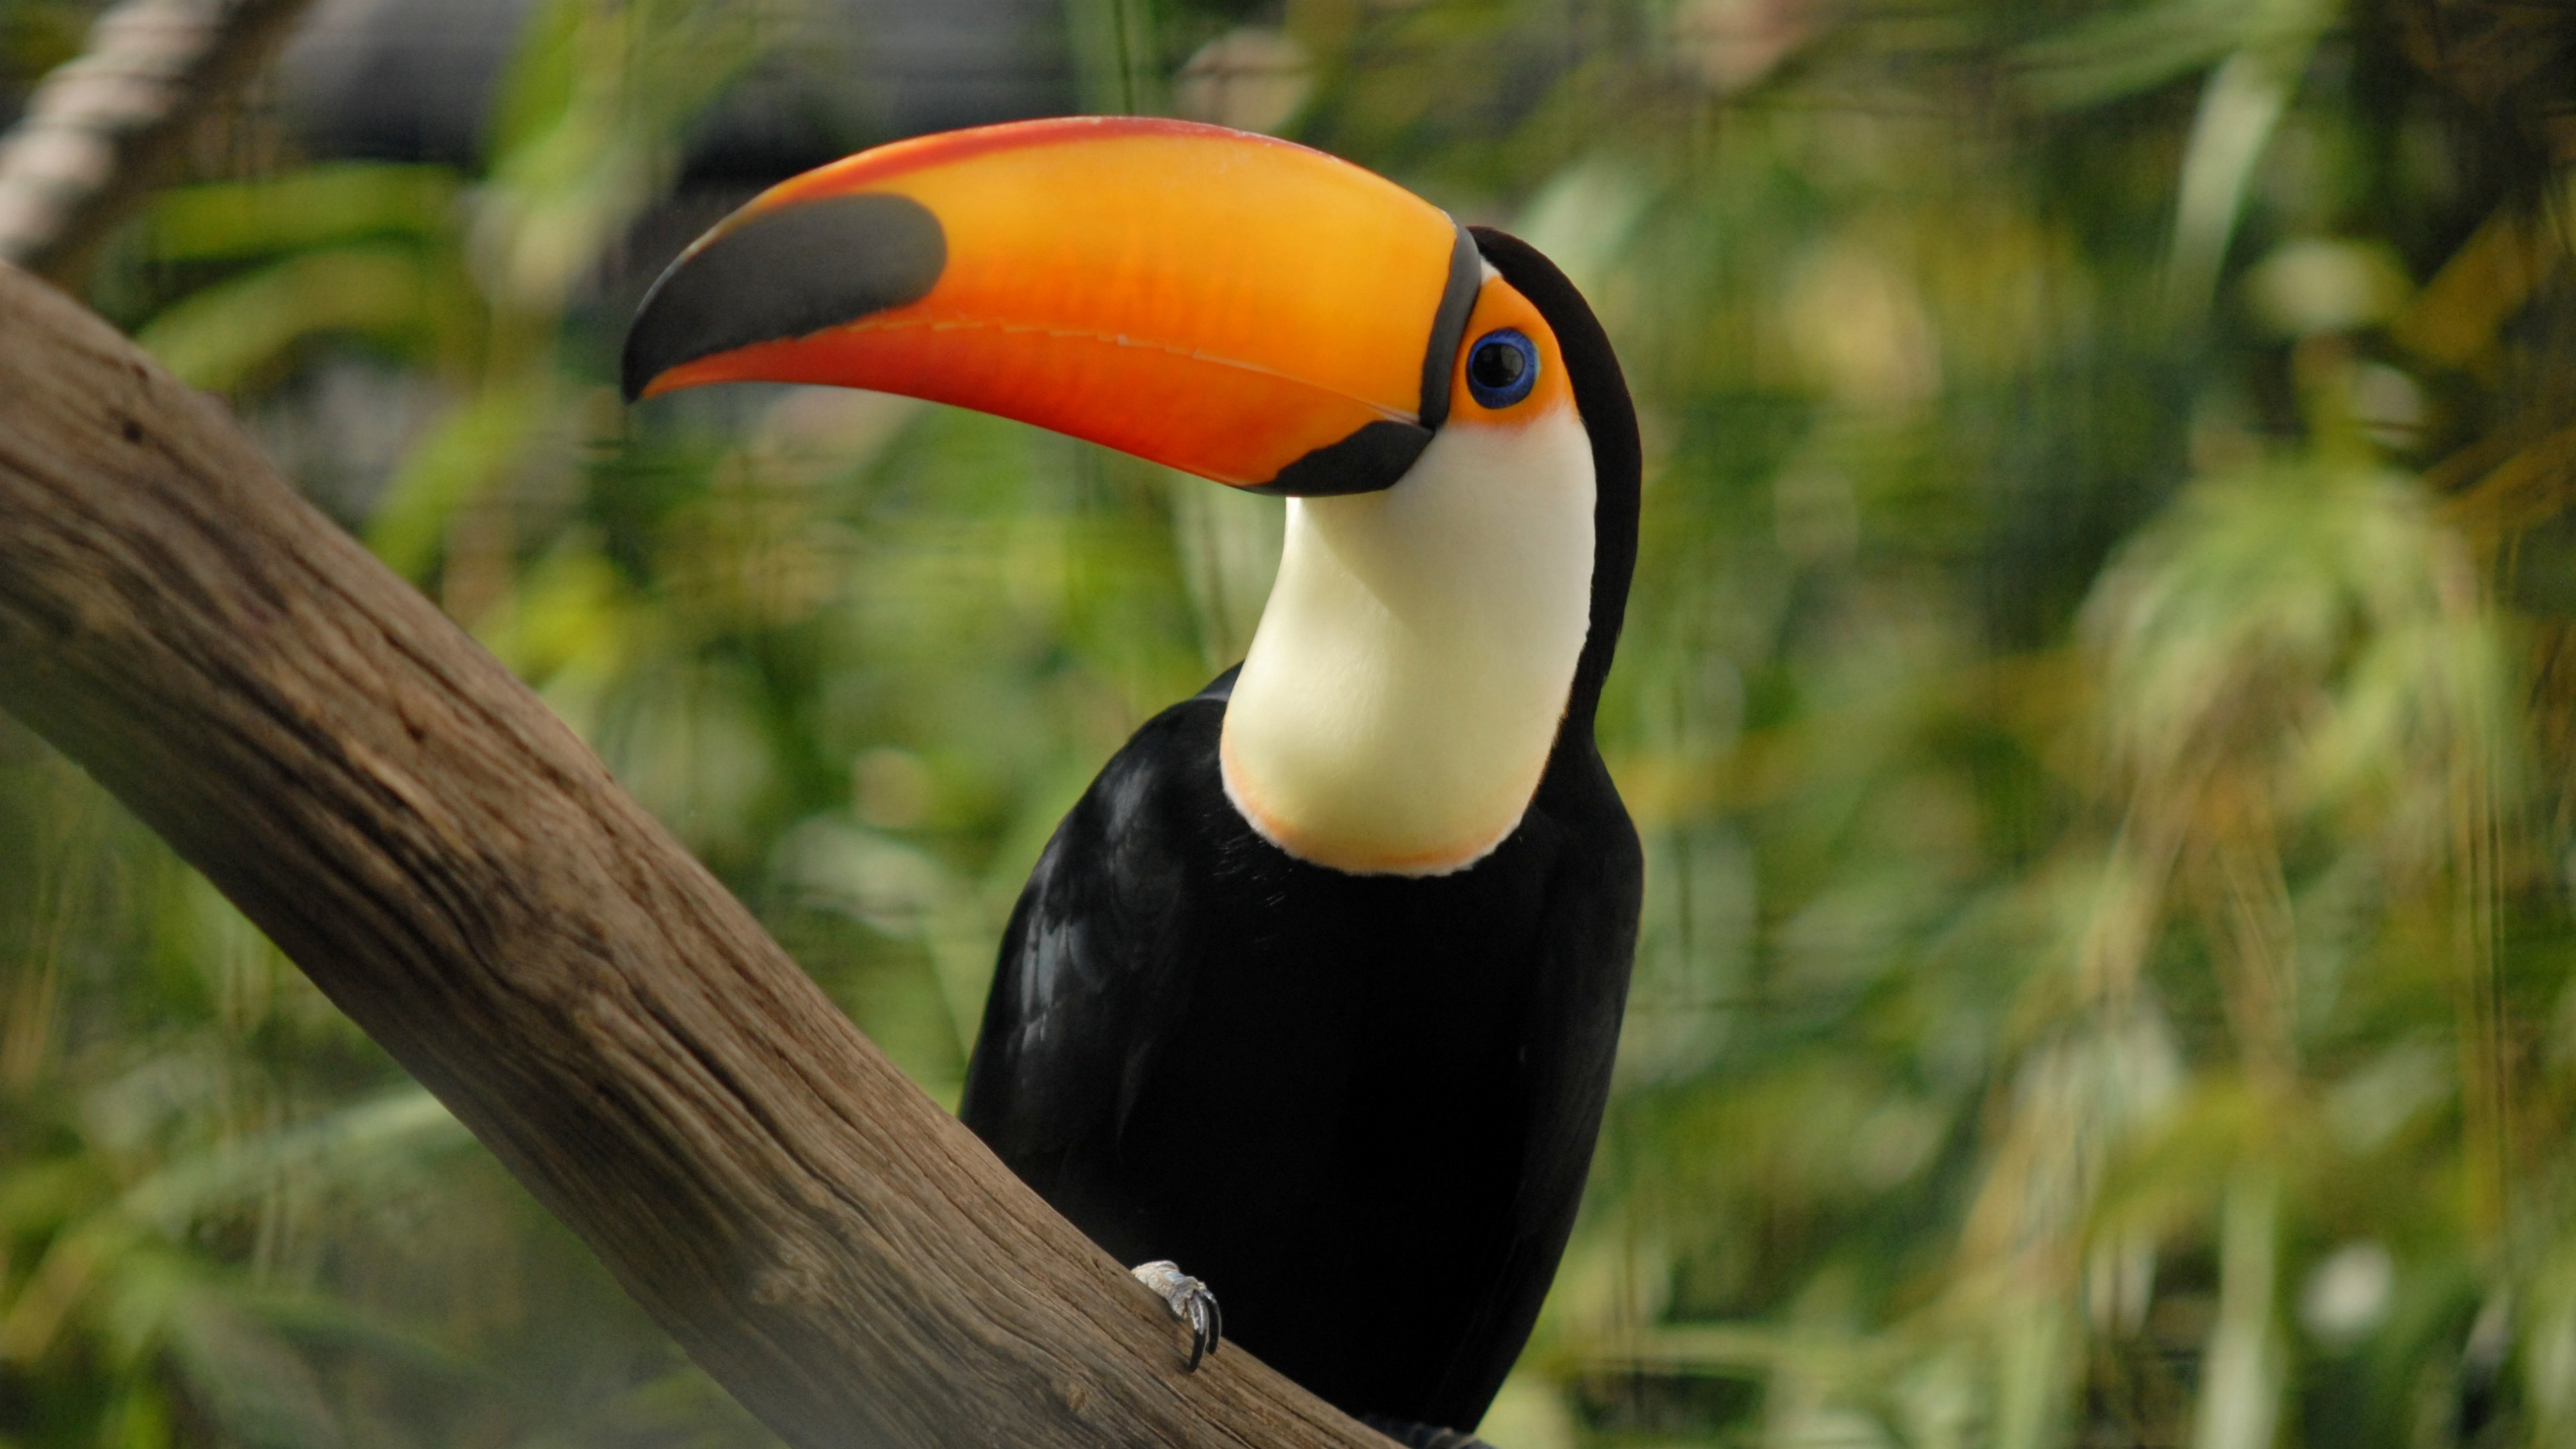 HD toucan wallpaper, Tropical bird, Vibrant plumage, Striking image, 3840x2160 4K Desktop